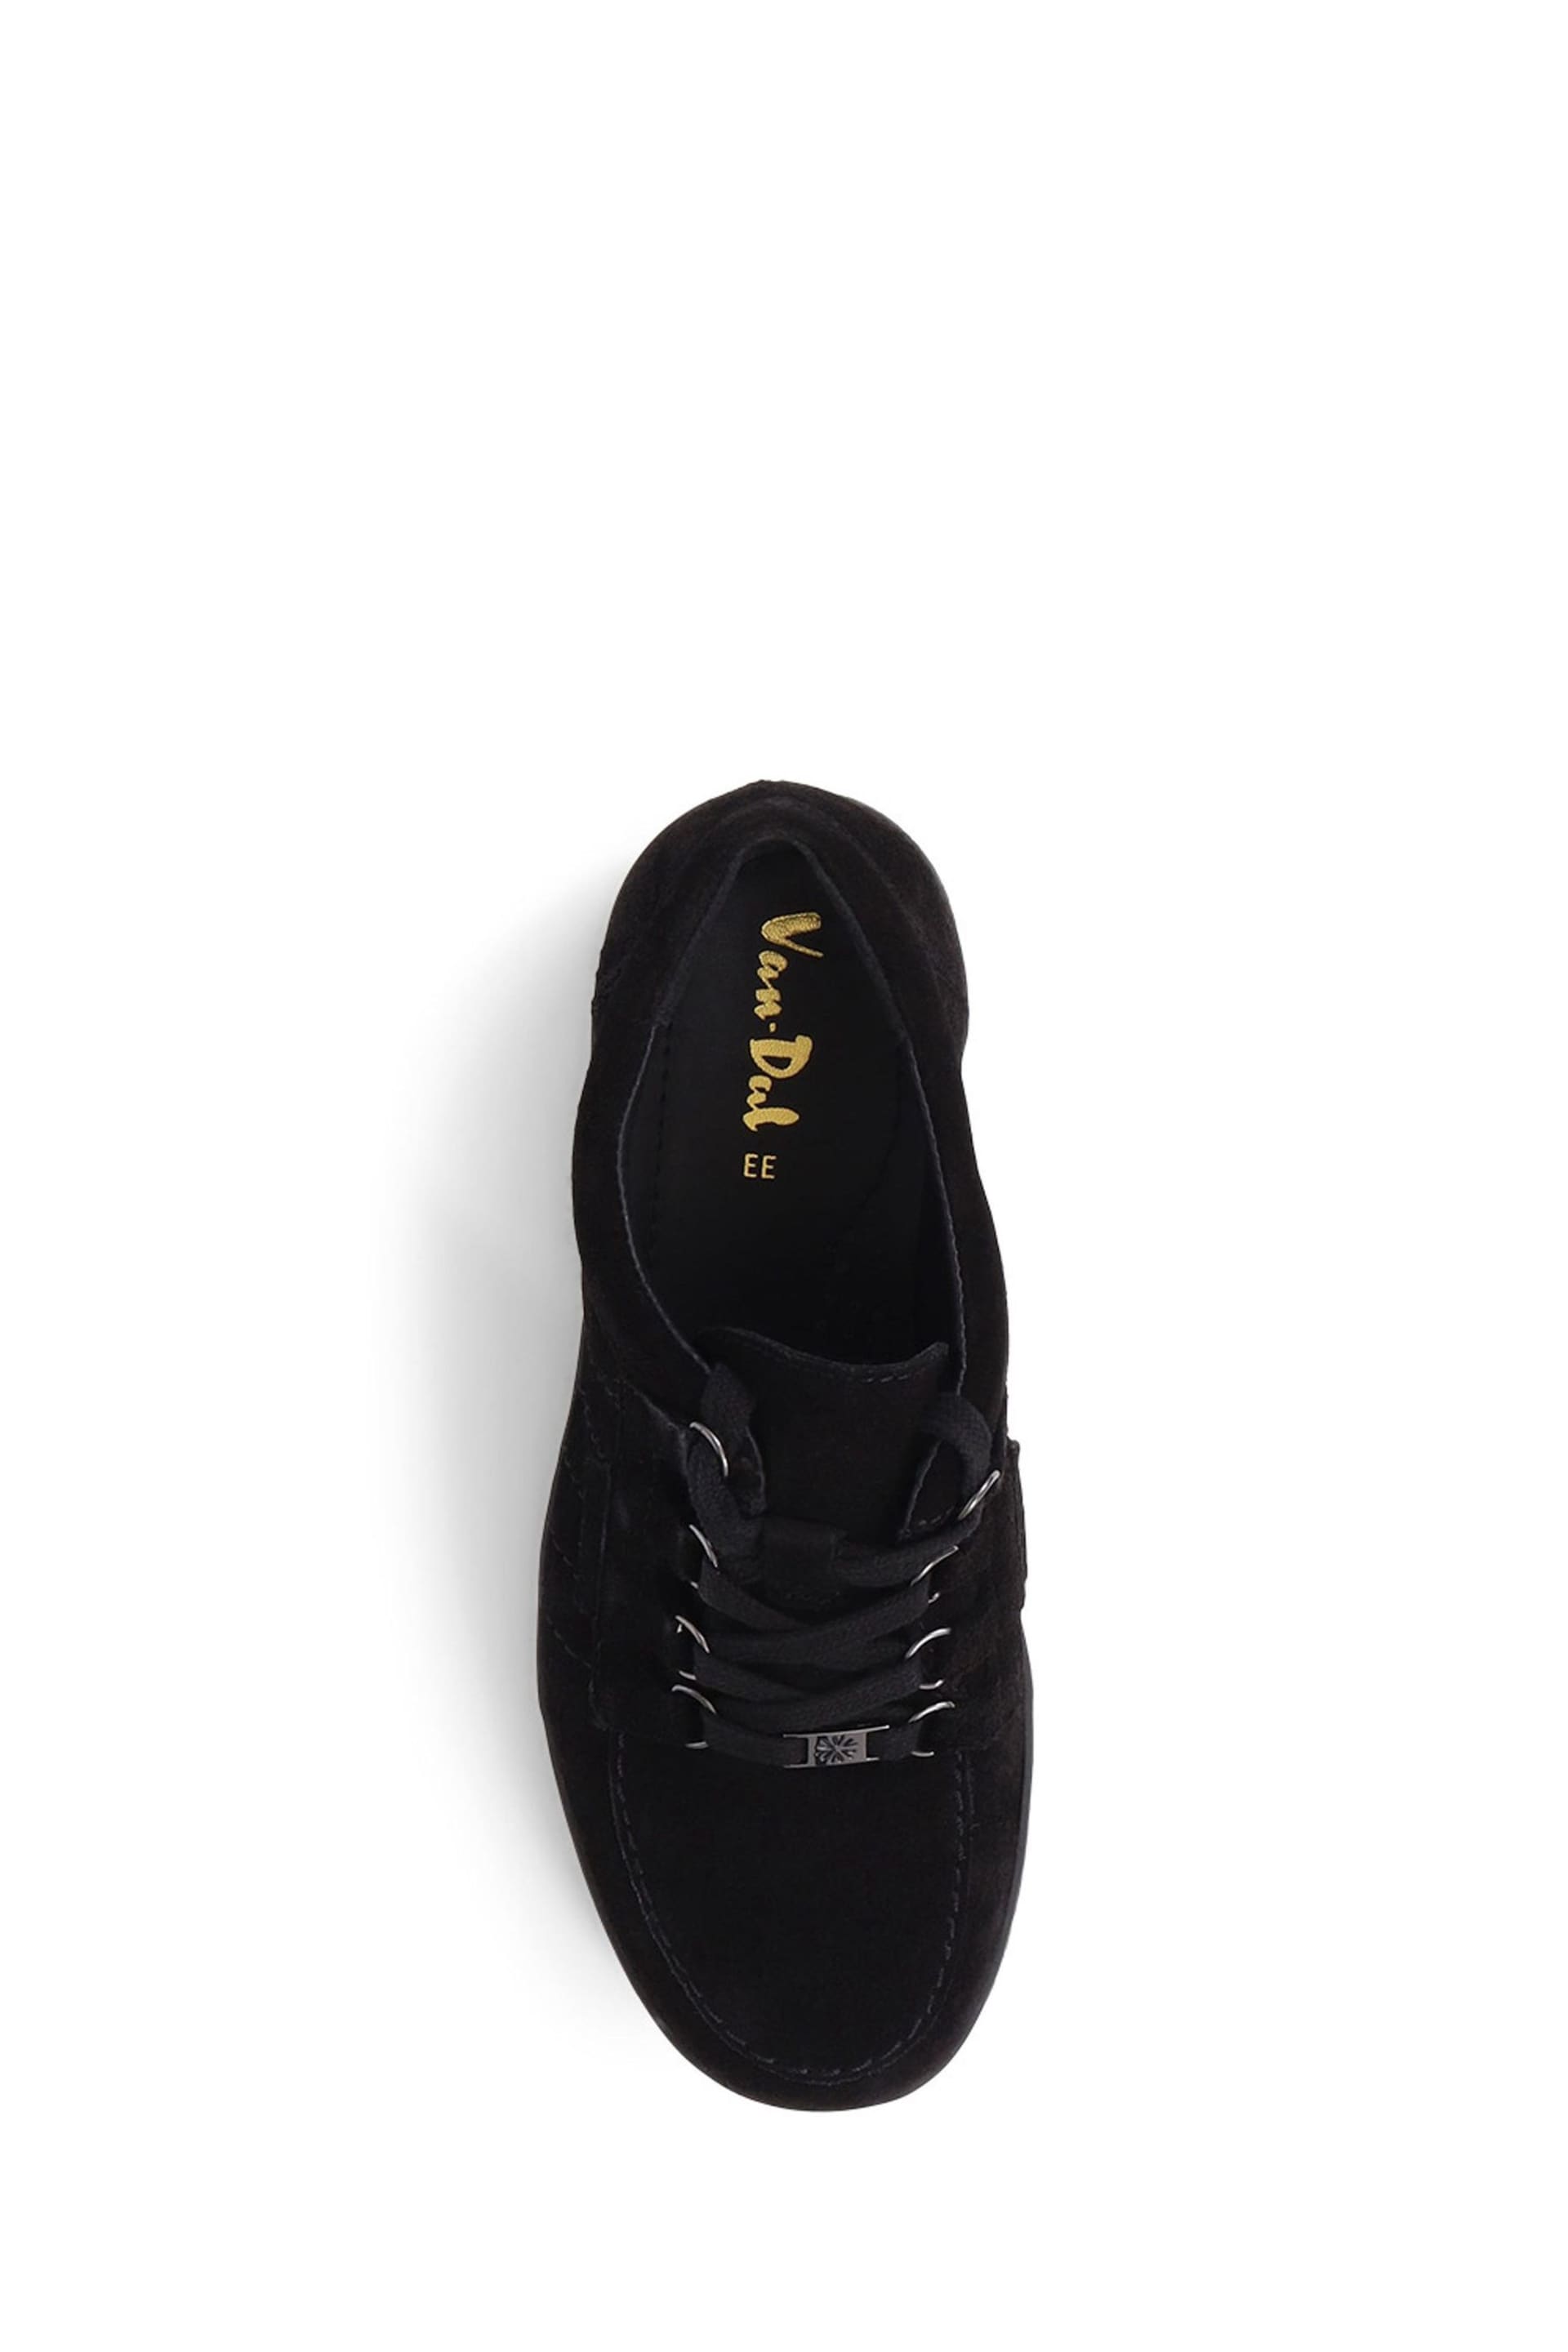 Van Dal Lace-Up Shoes - Image 4 of 5